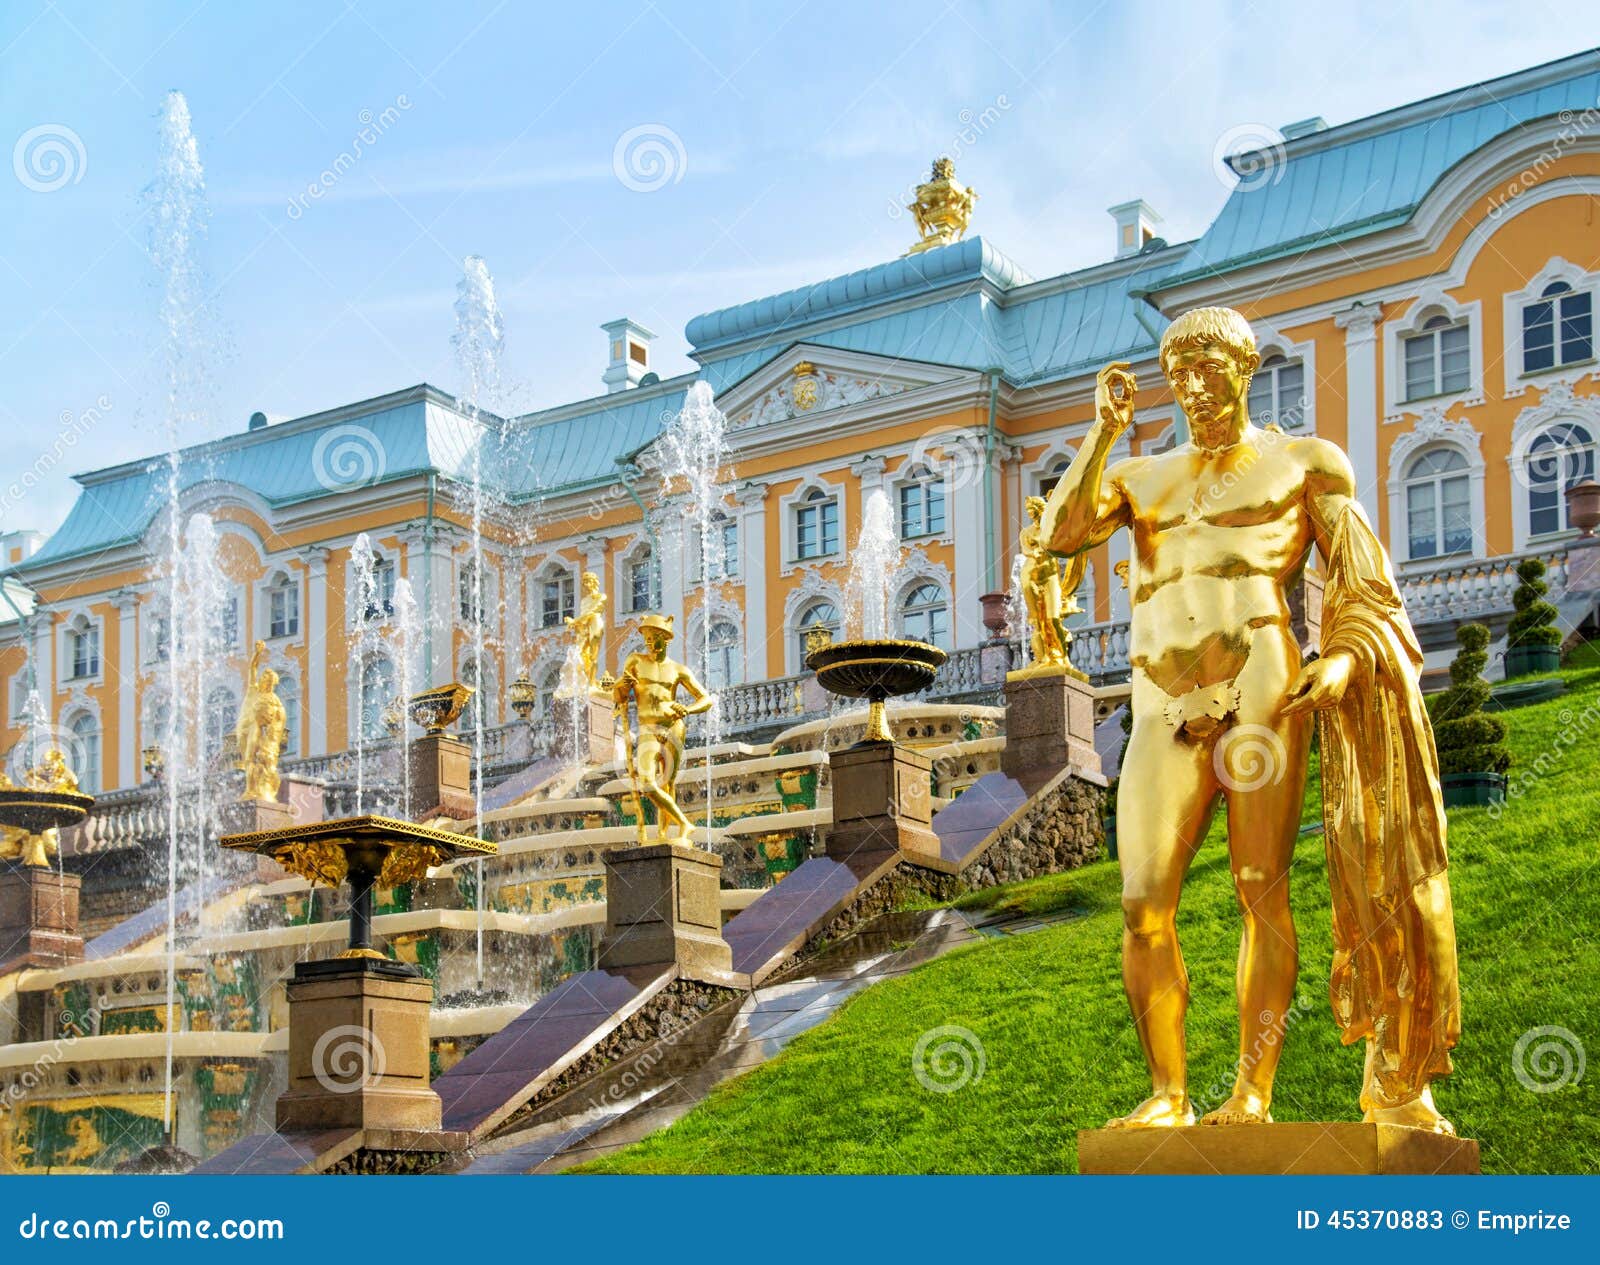 grand cascade in peterhof palace, saint petersburg, russia